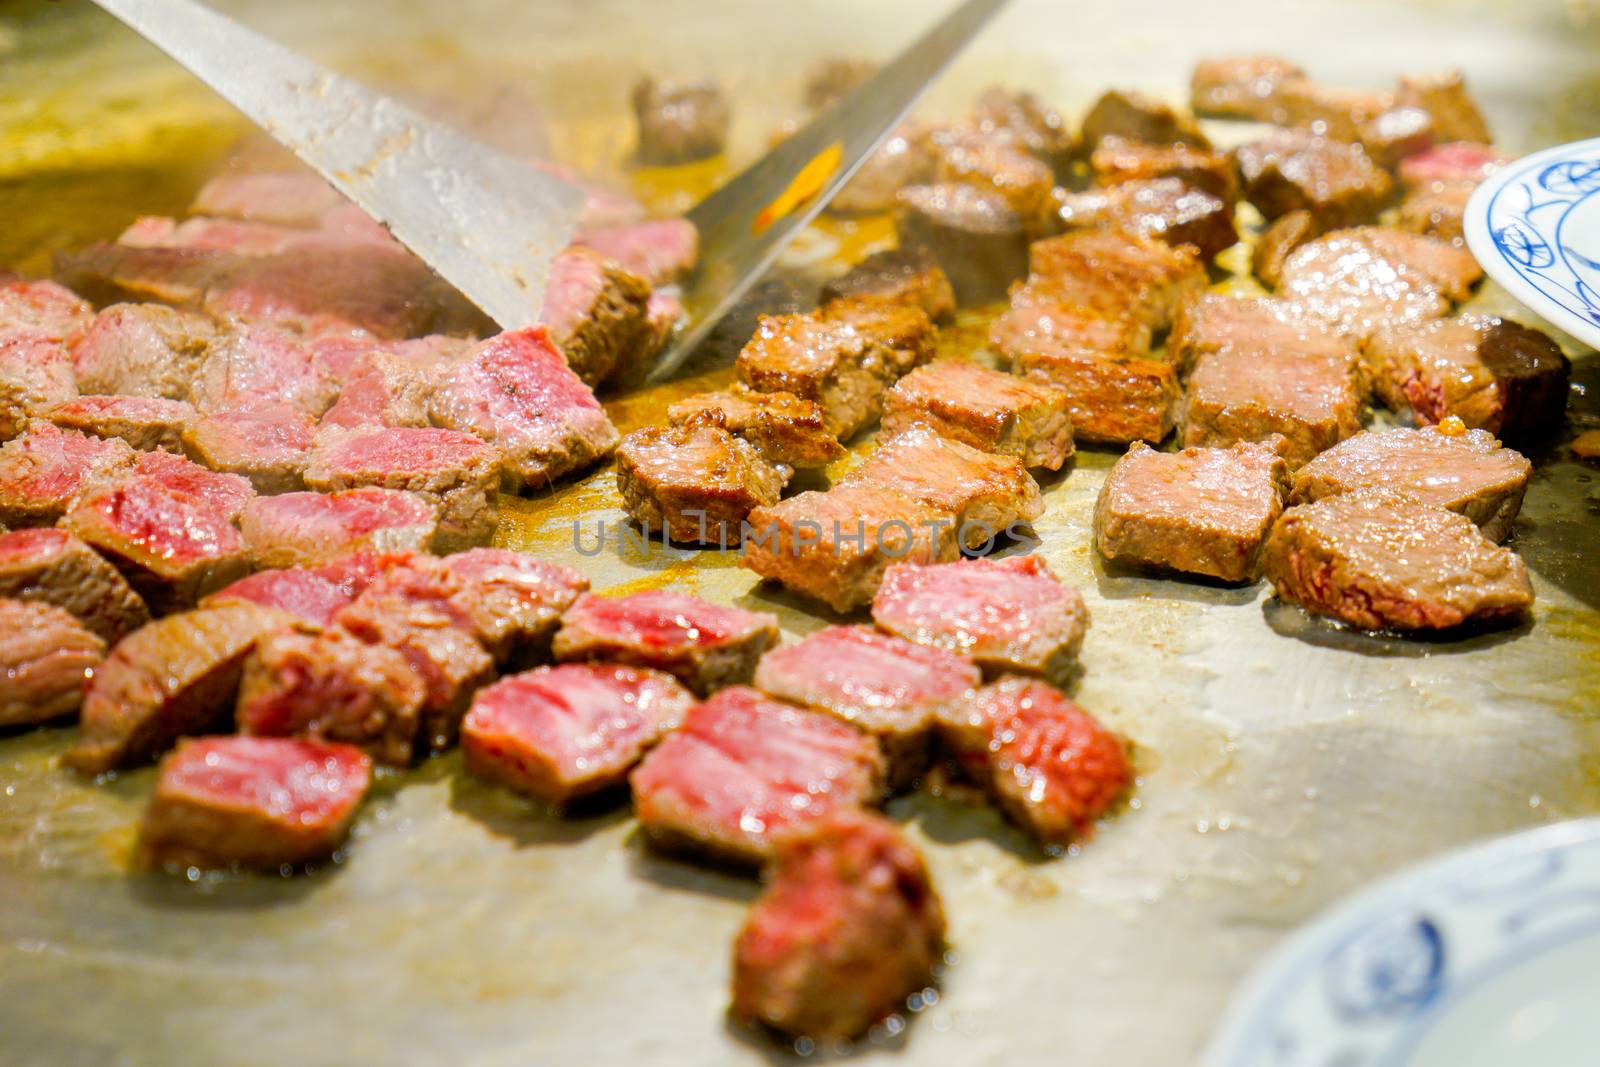 Kobe steak on the hot pan in Japan by Alicephoto